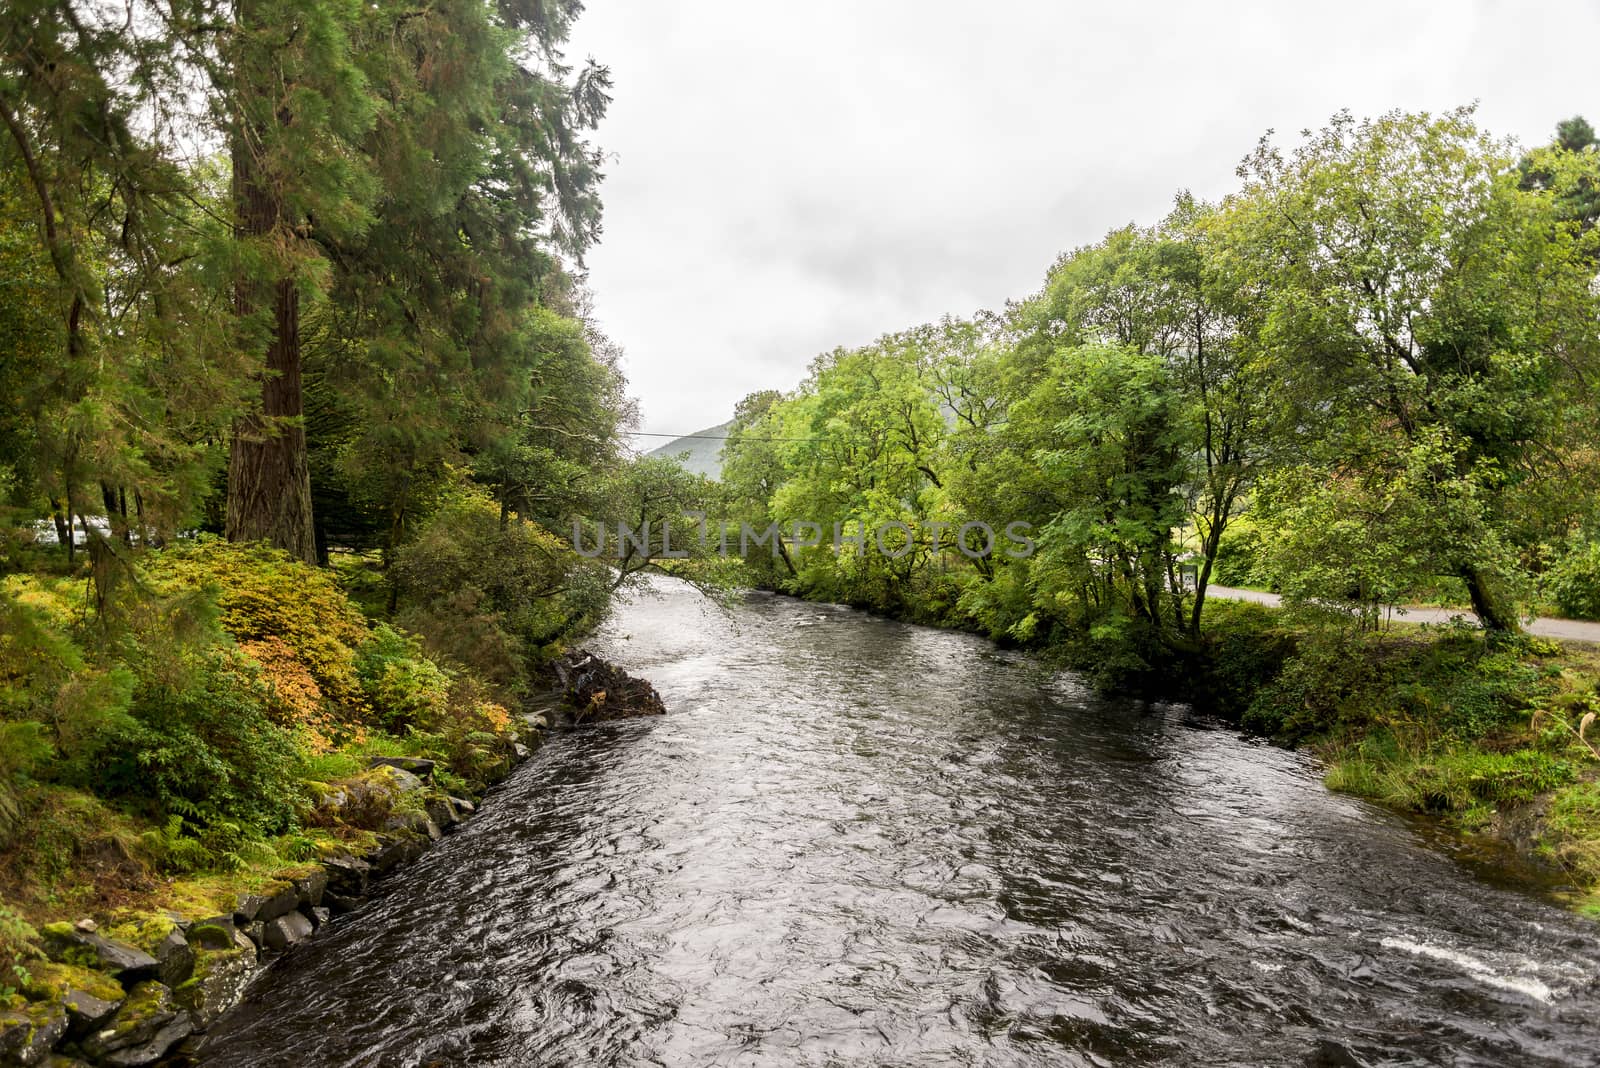 River Eachaig flowing thru Benmore Botanic Garden, Loch Lomond and the Trossachs National Park, Scotland